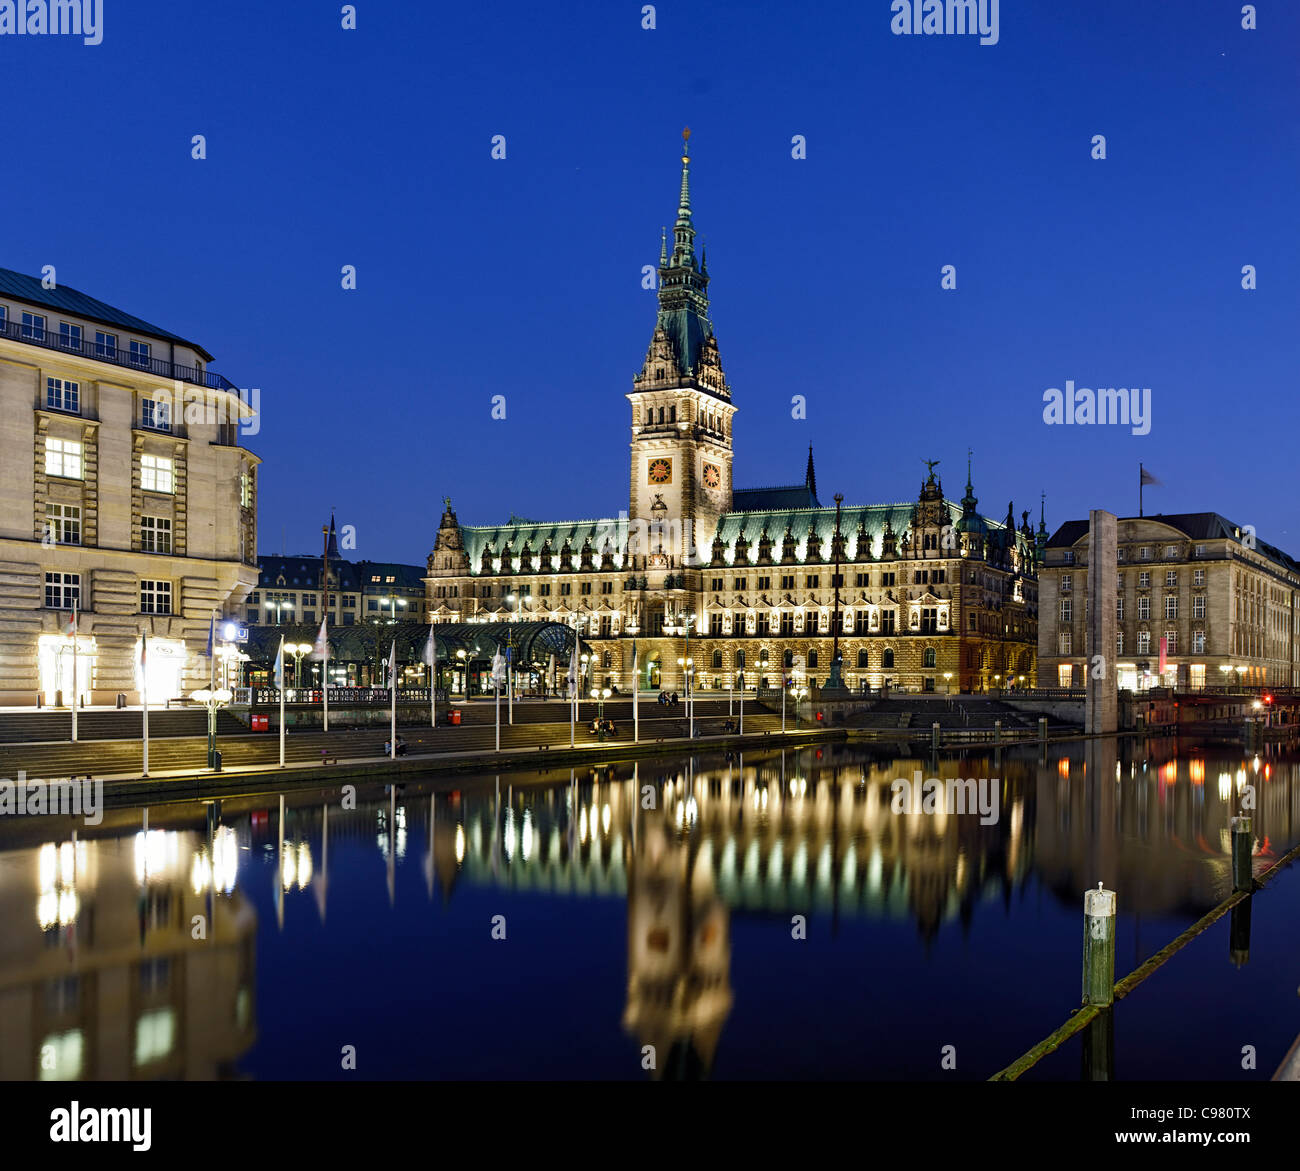 Alsterfleet canal, Alsterarkaden arcades, Rathausmarkt town hall square, town hall, Hanseatic city of Hamburg, Germany, Europe Stock Photo